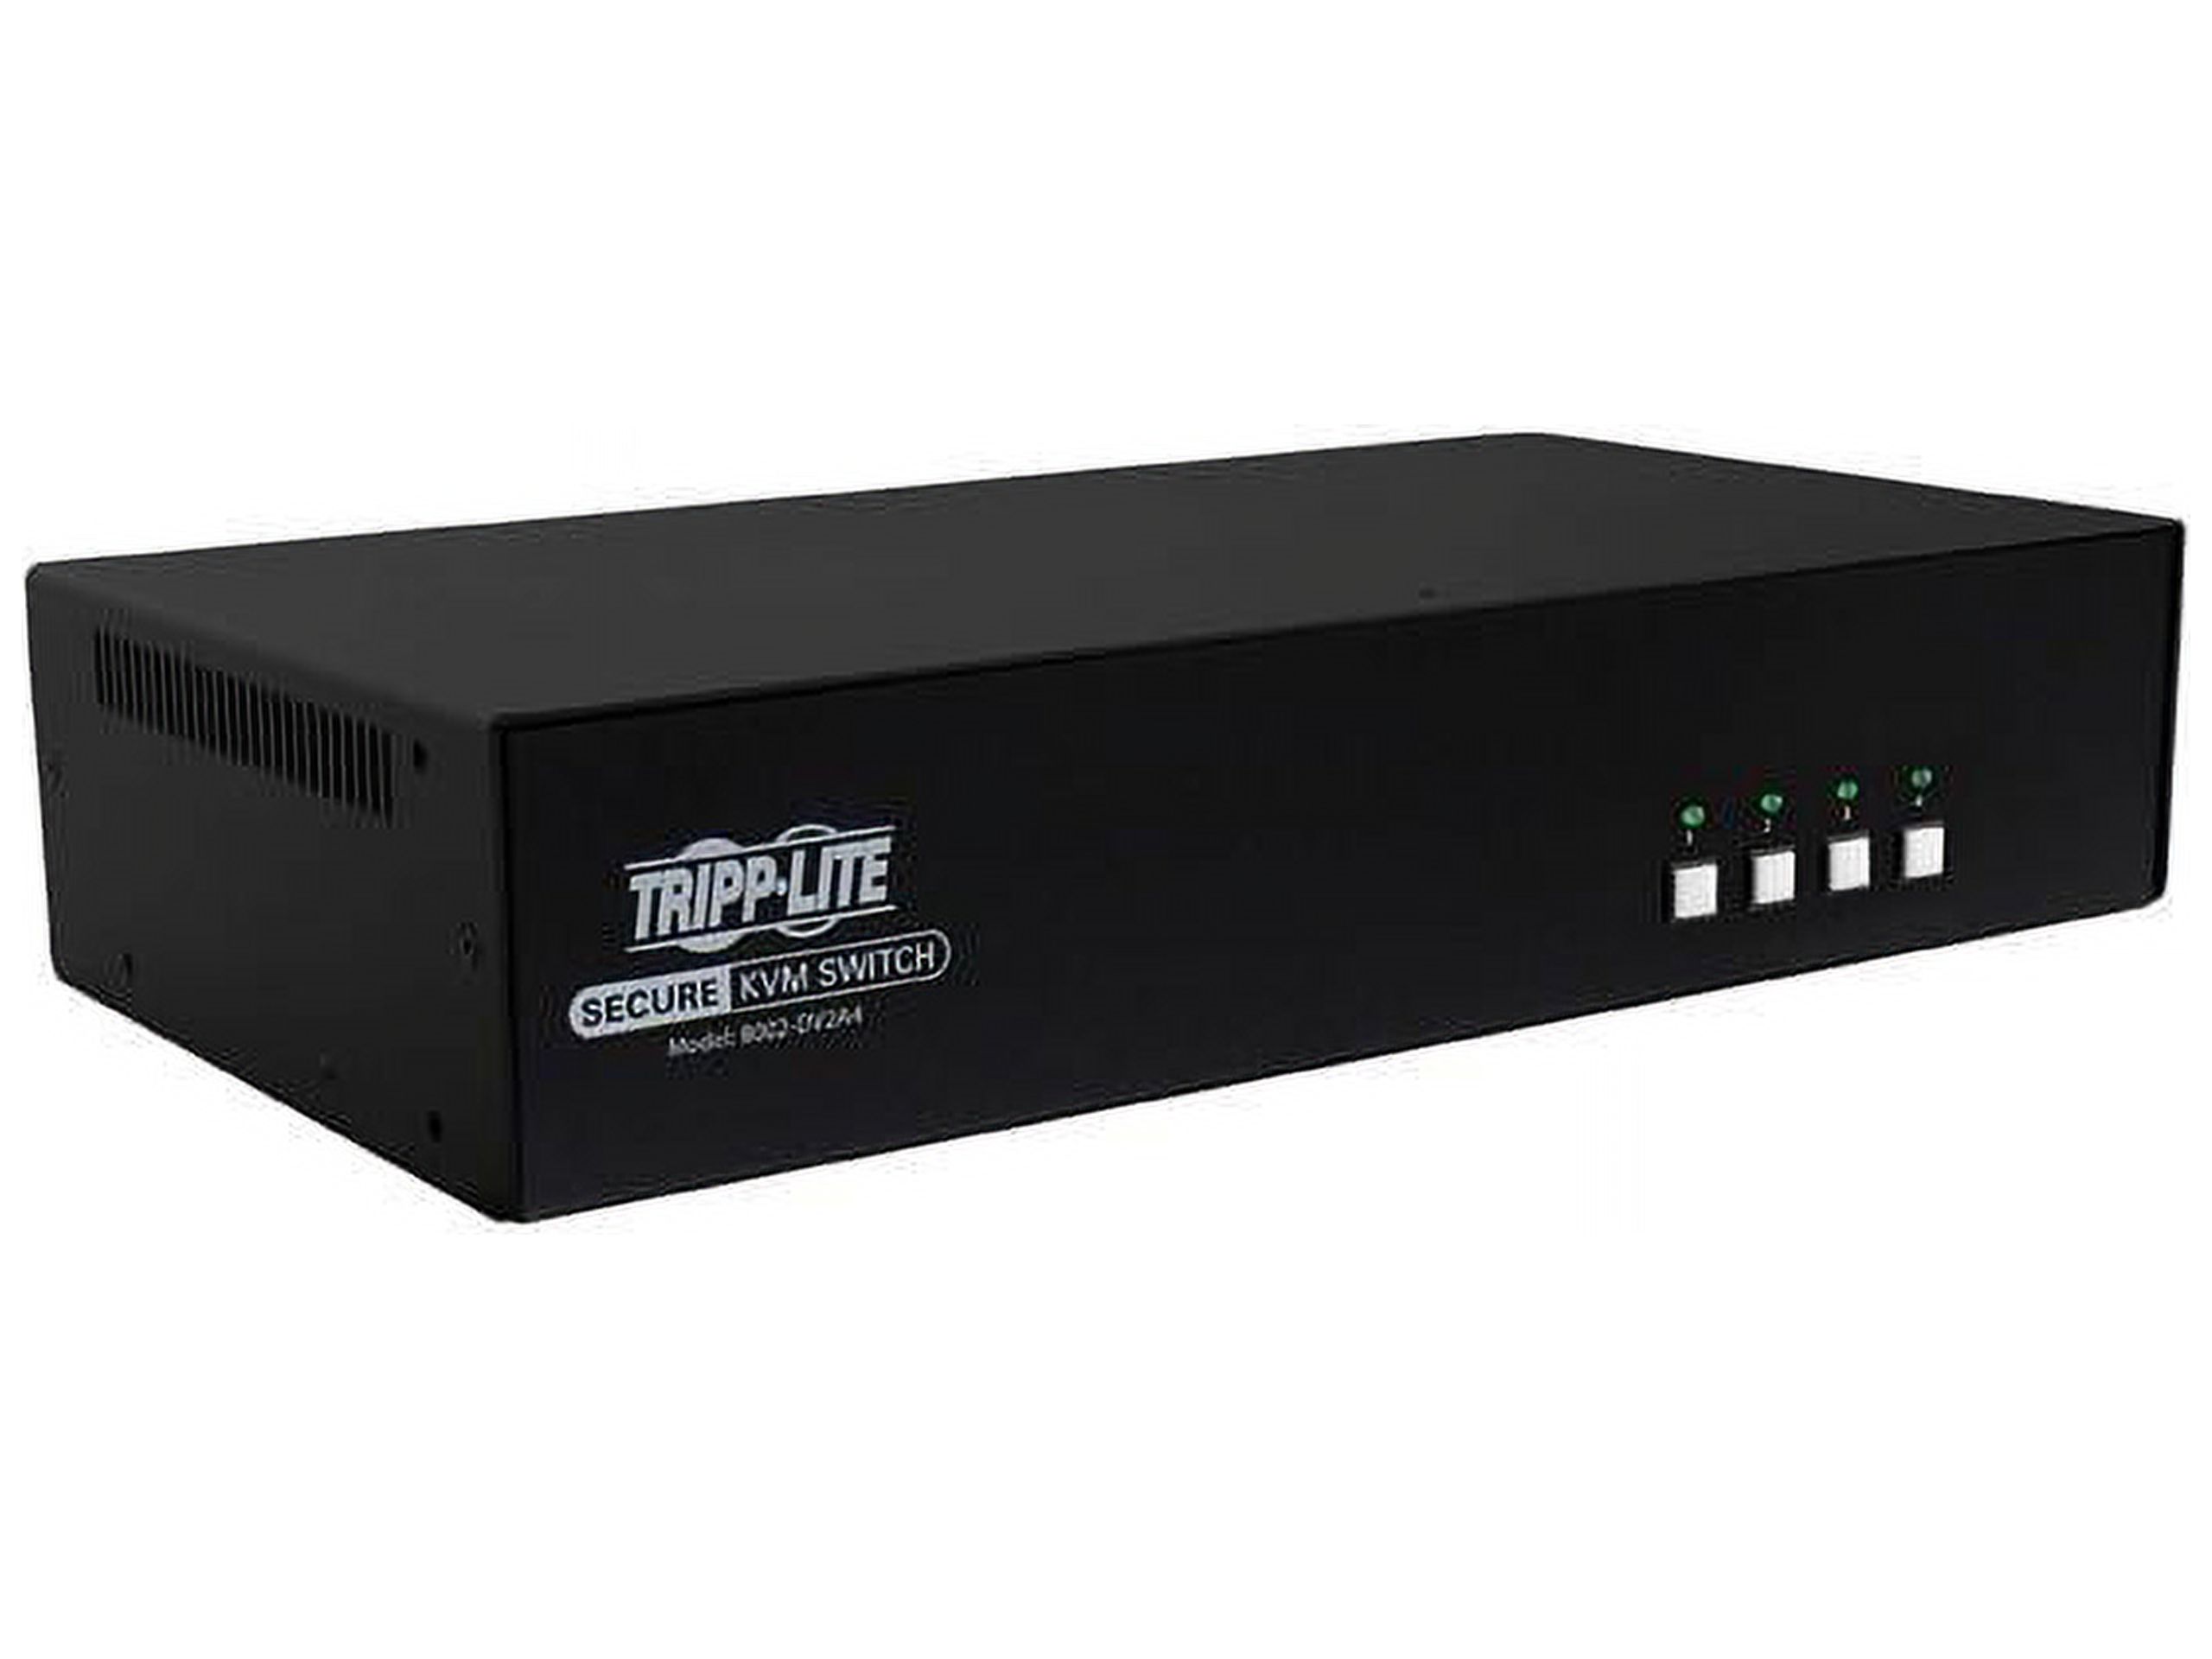 Tripp Lite 4 Port Secure KVM Switch, DVI to DVI, Dual Monitor, NIAP PP3.0 Certified, Audio, TAA-Compliant (B002-DV2A4) - image 2 of 4